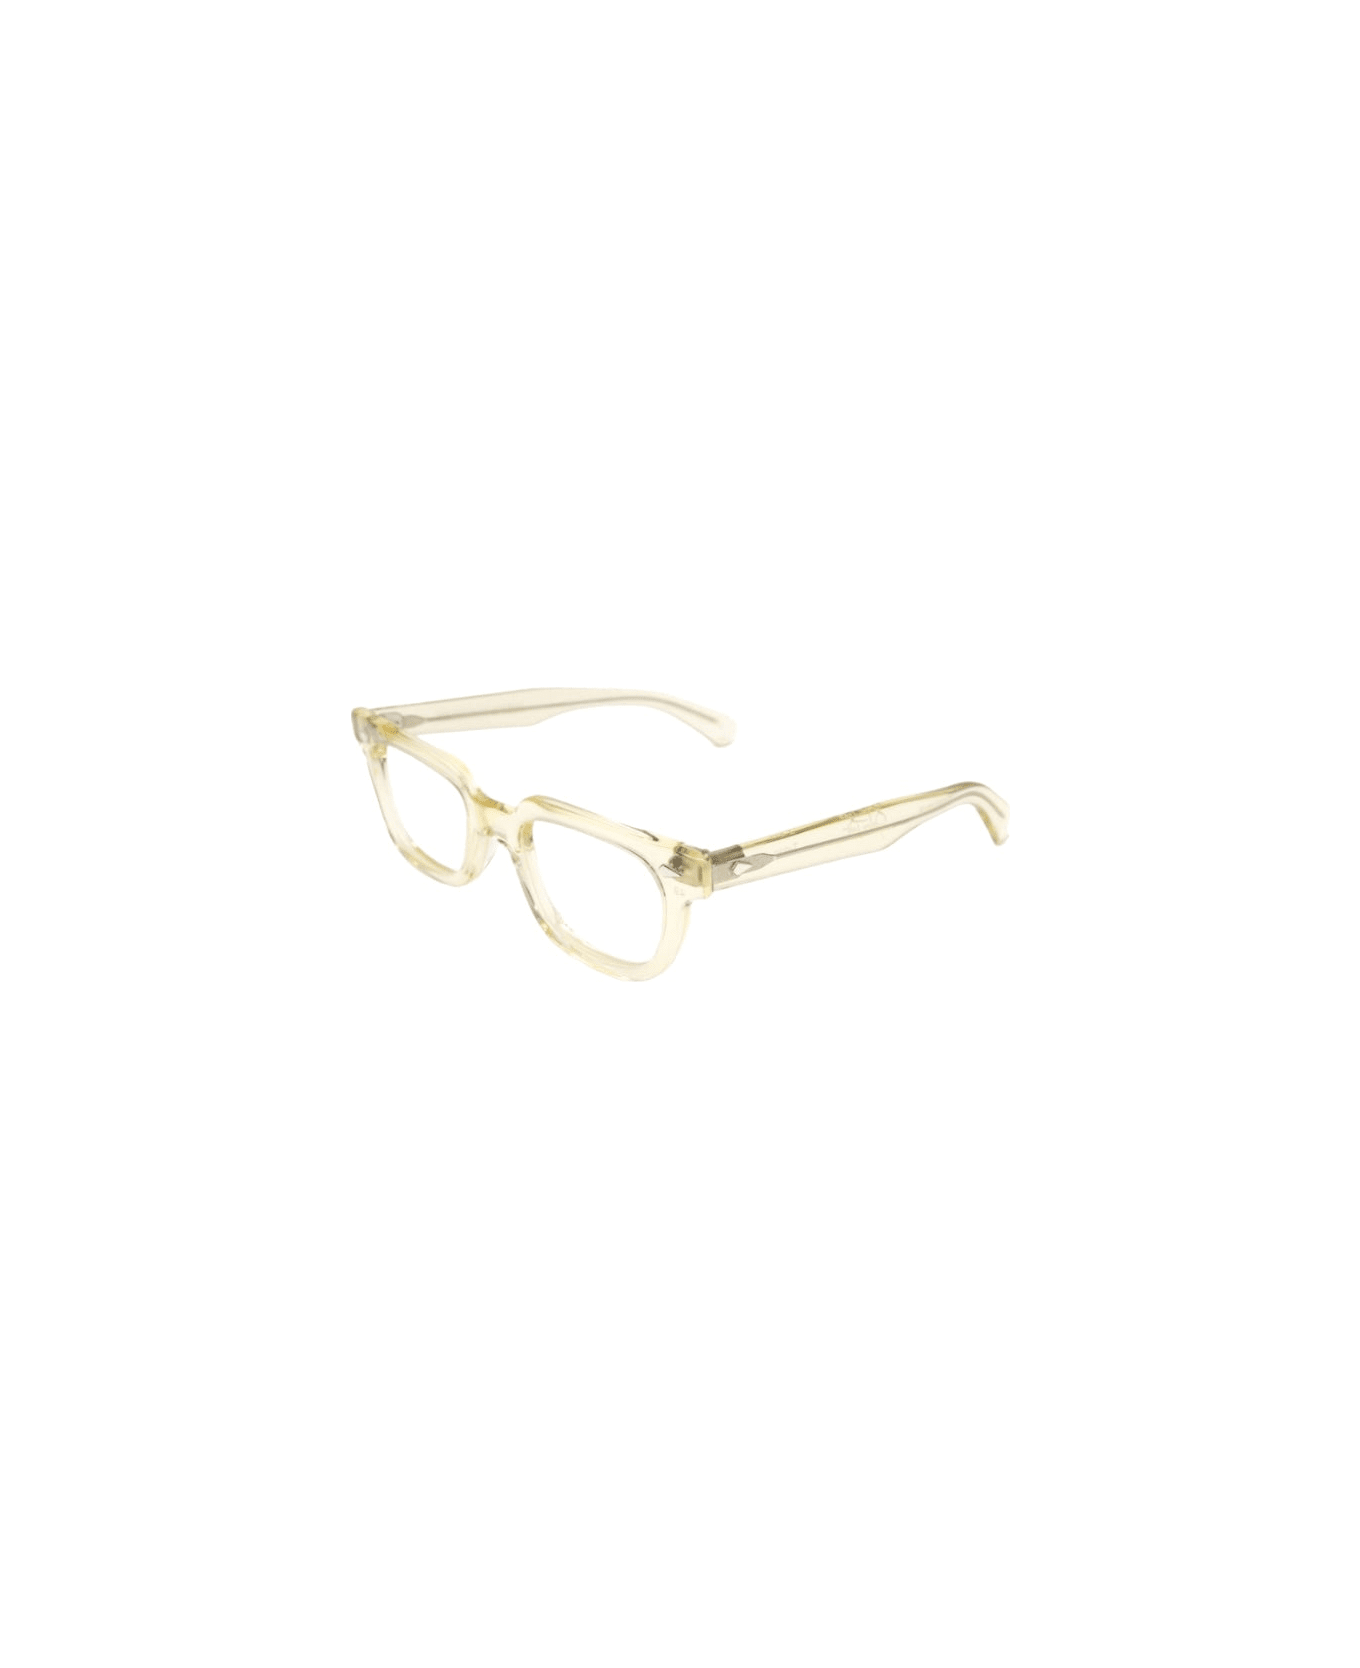 Julius Tart Optical T-man - Champagne Glasses